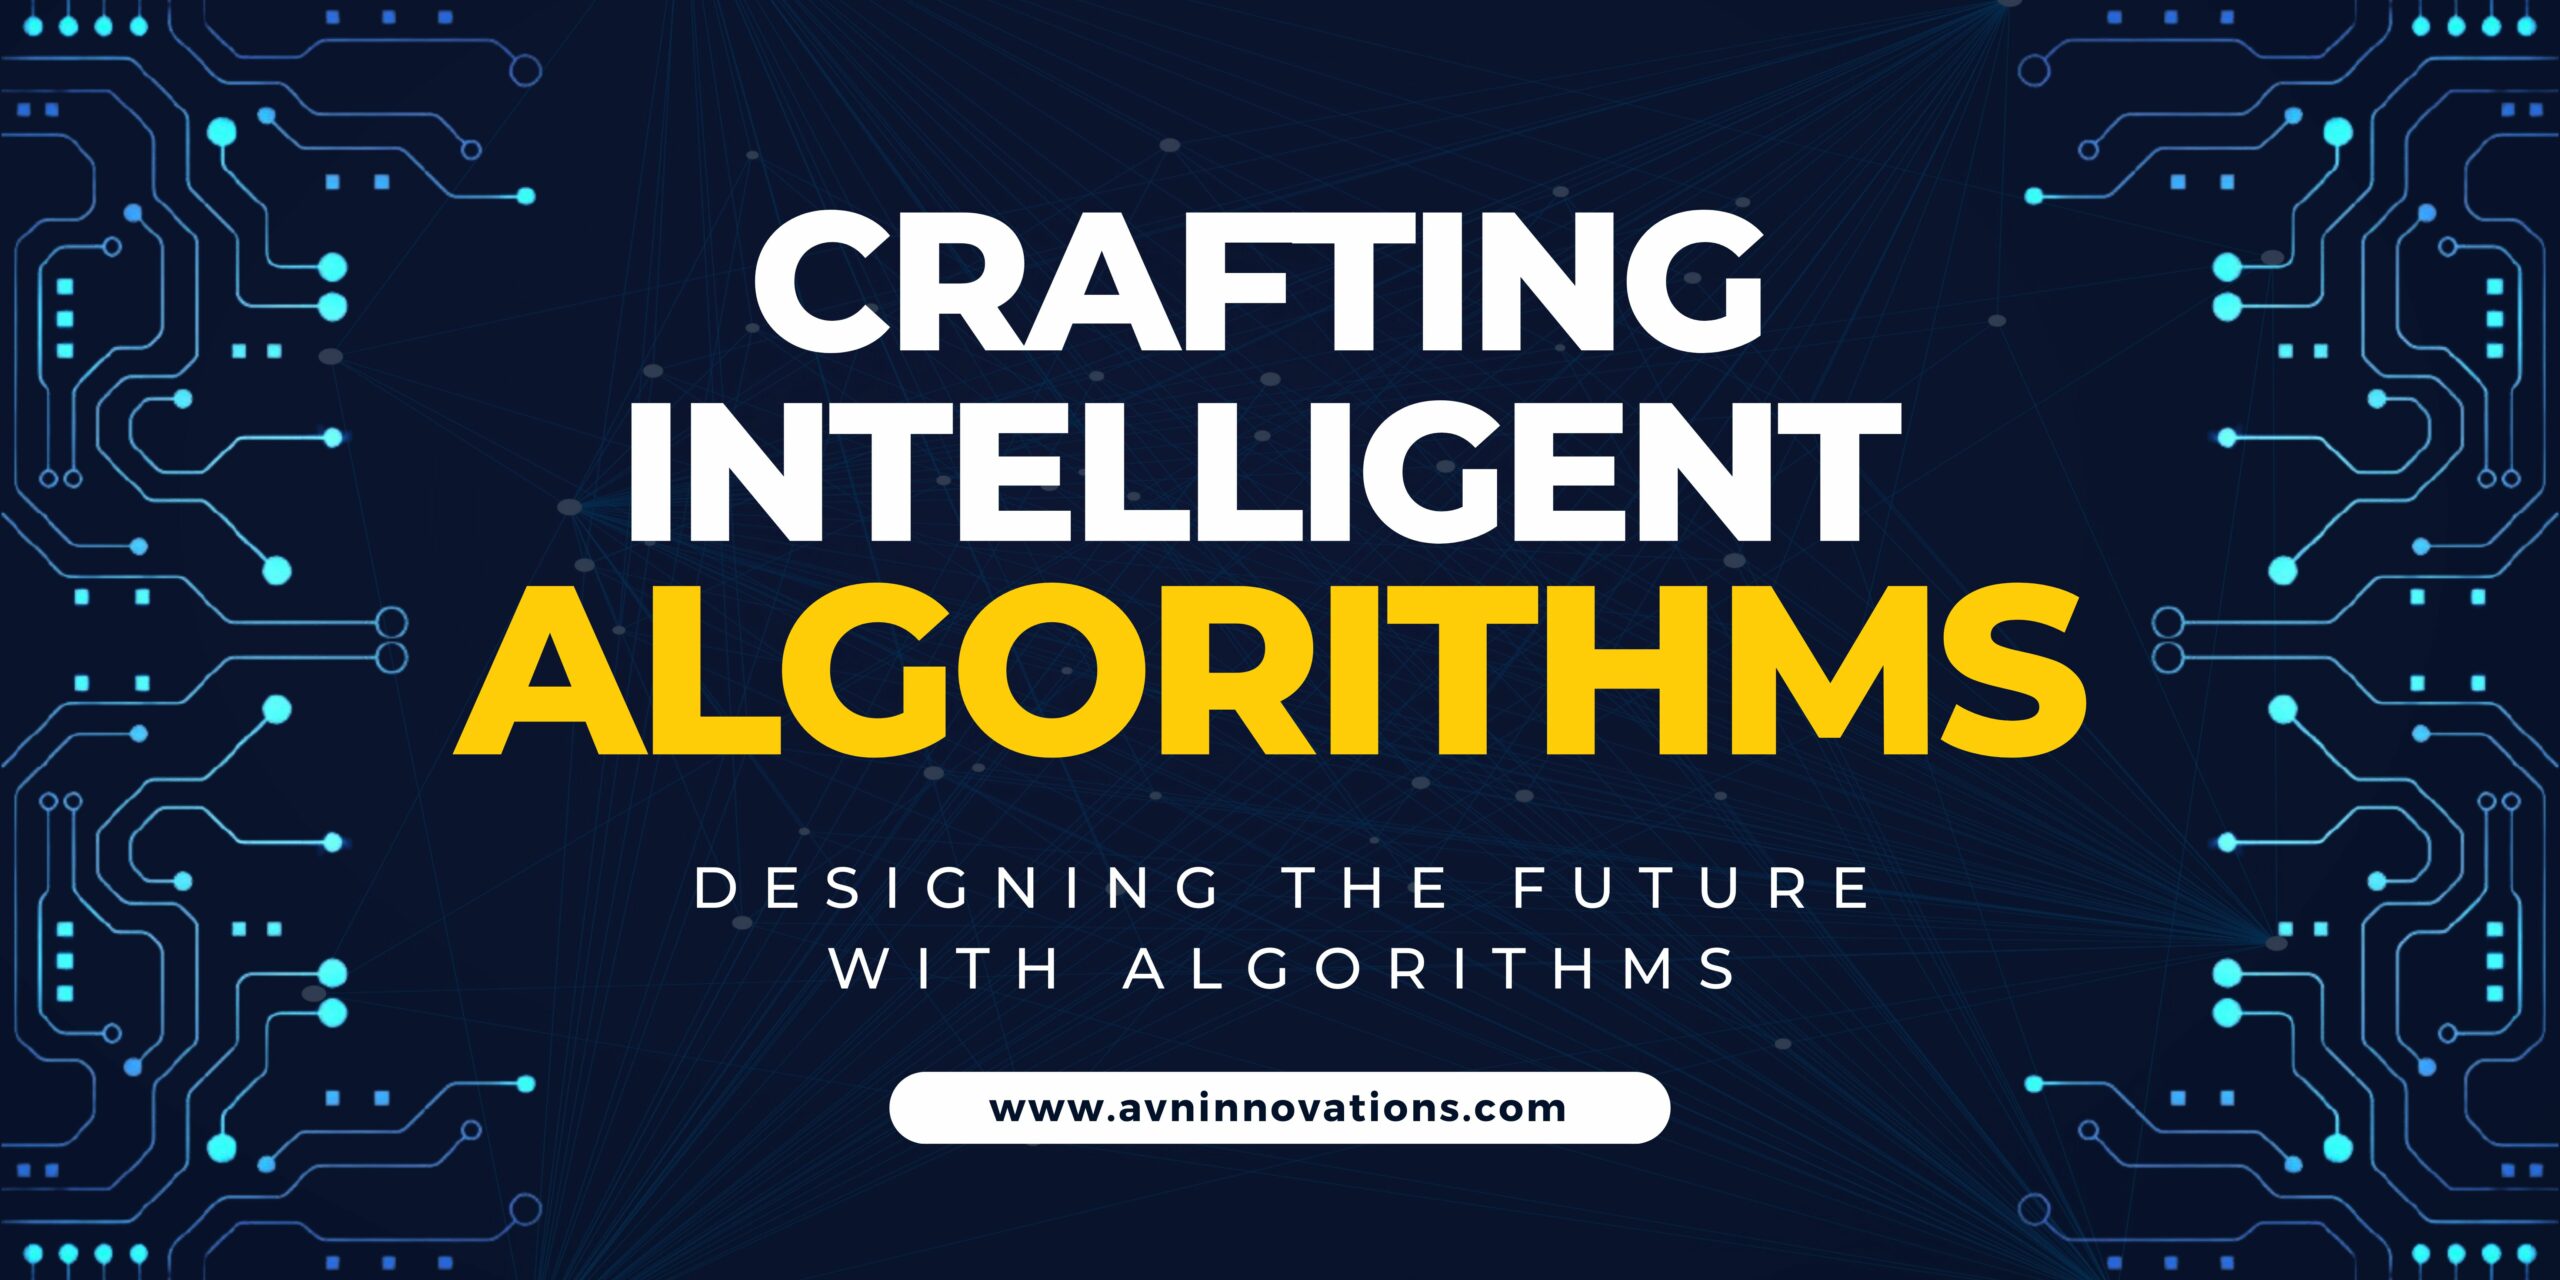 Crafting intelligent algorithms